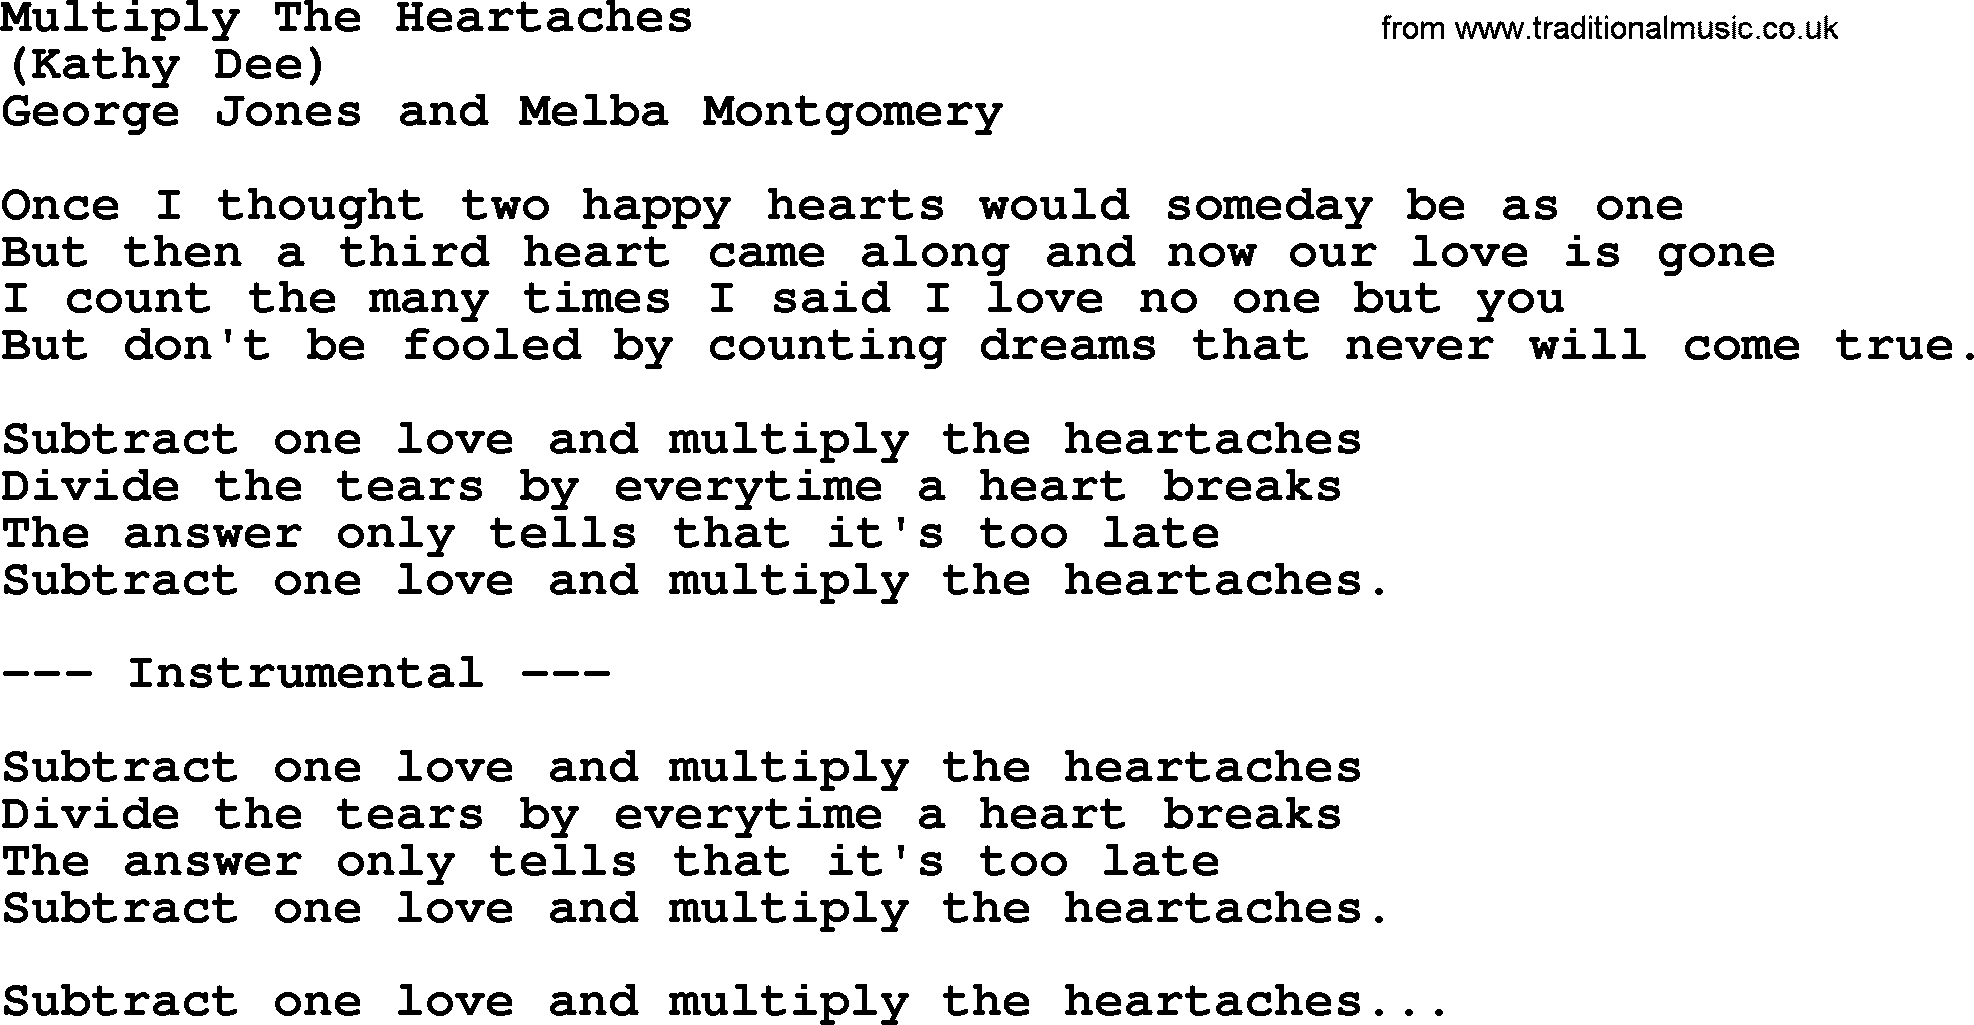 George Jones song: Multiply The Heartaches, lyrics